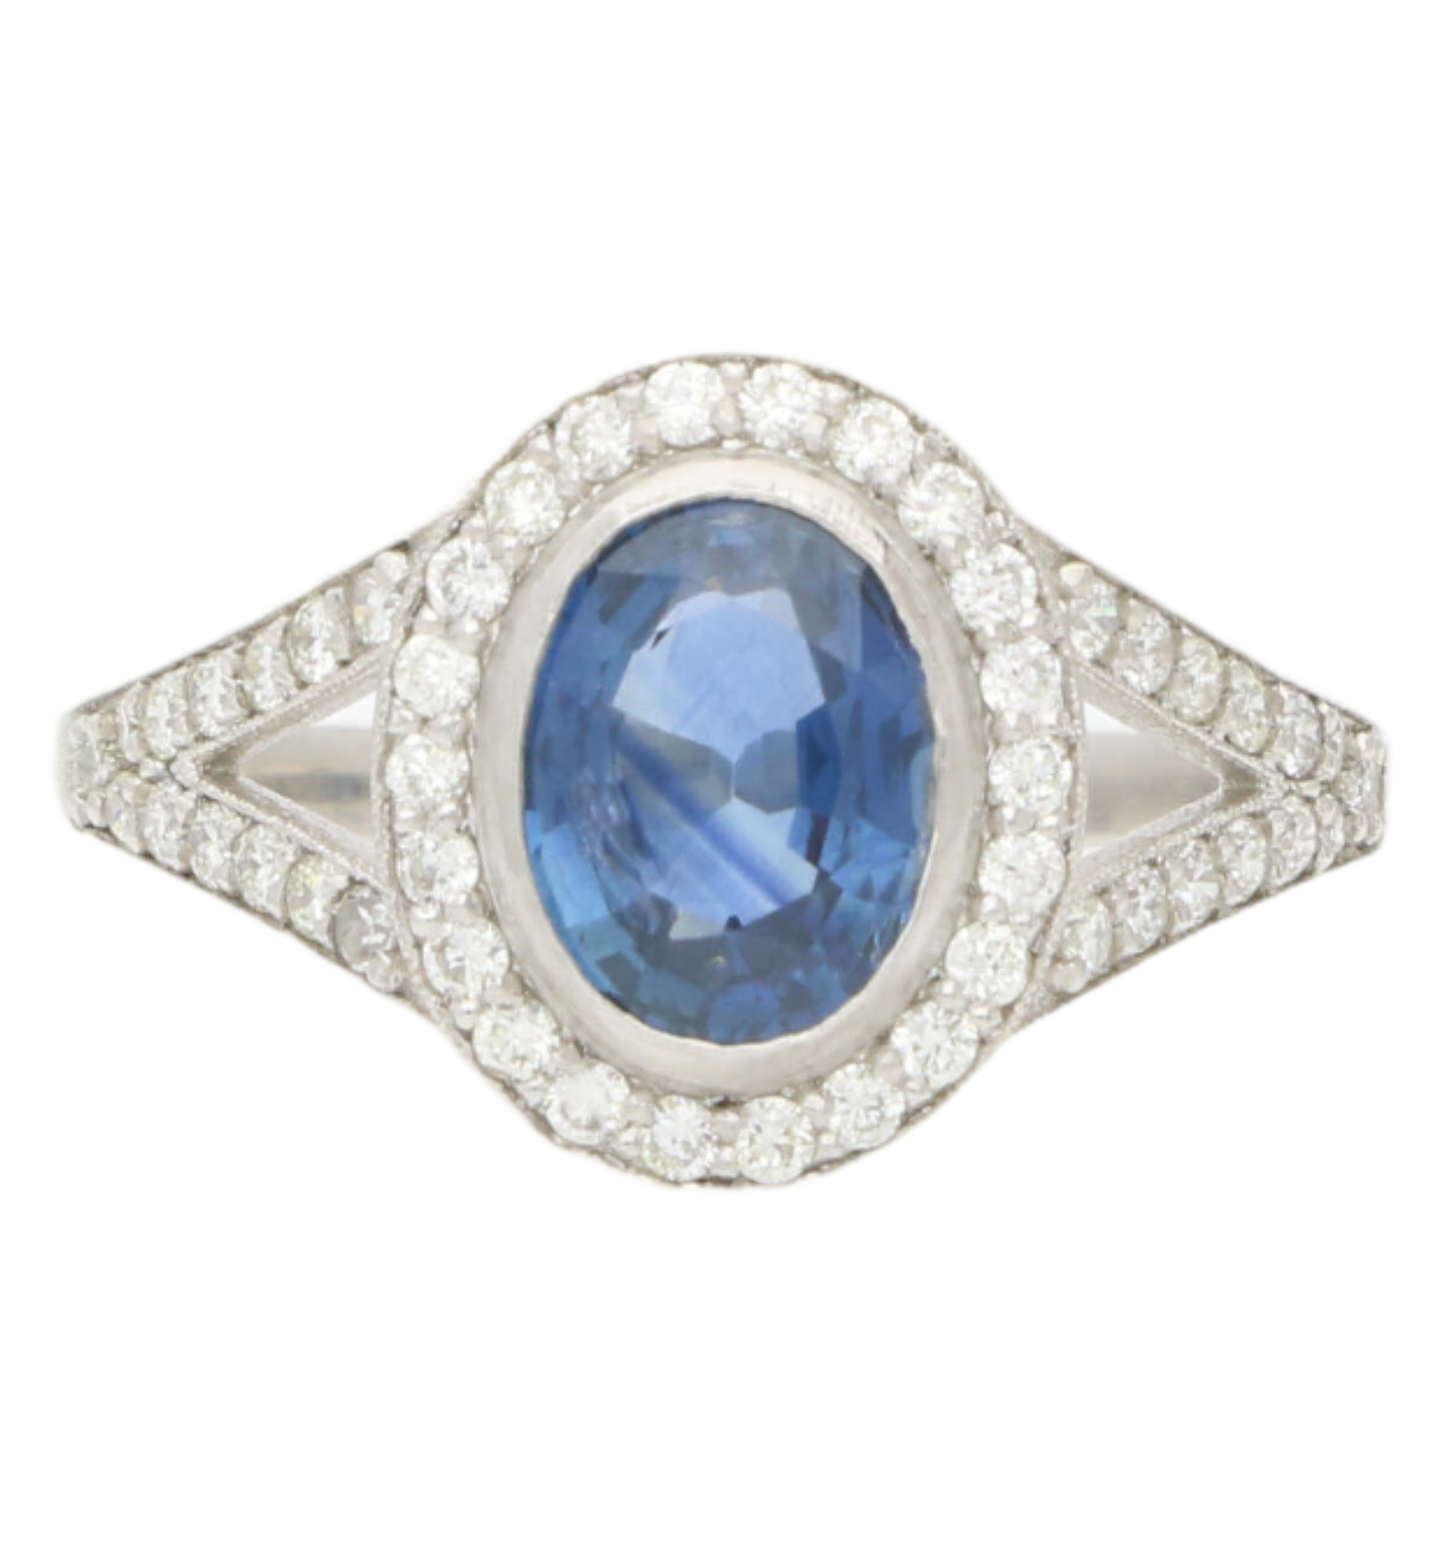 Platinum sapphire and diamond engagement ring